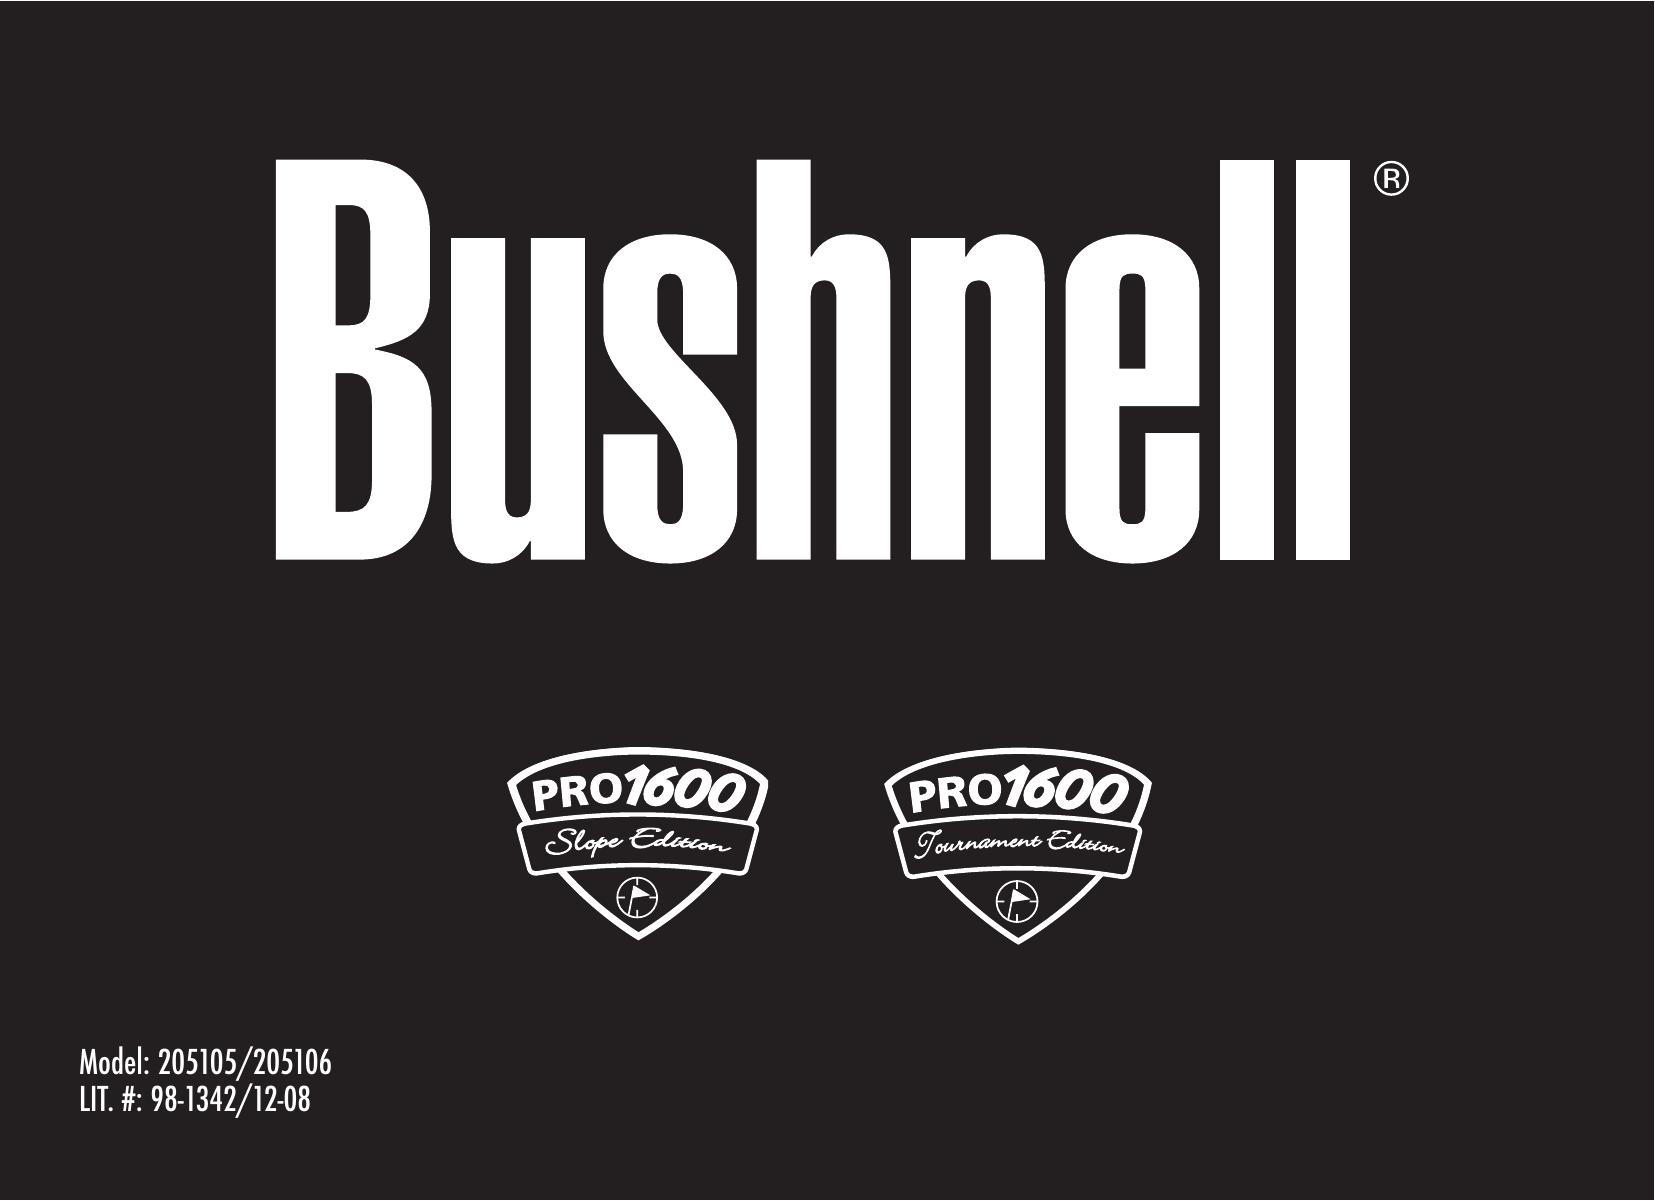 Bushnell 20 5105 Camera Accessories User Manual